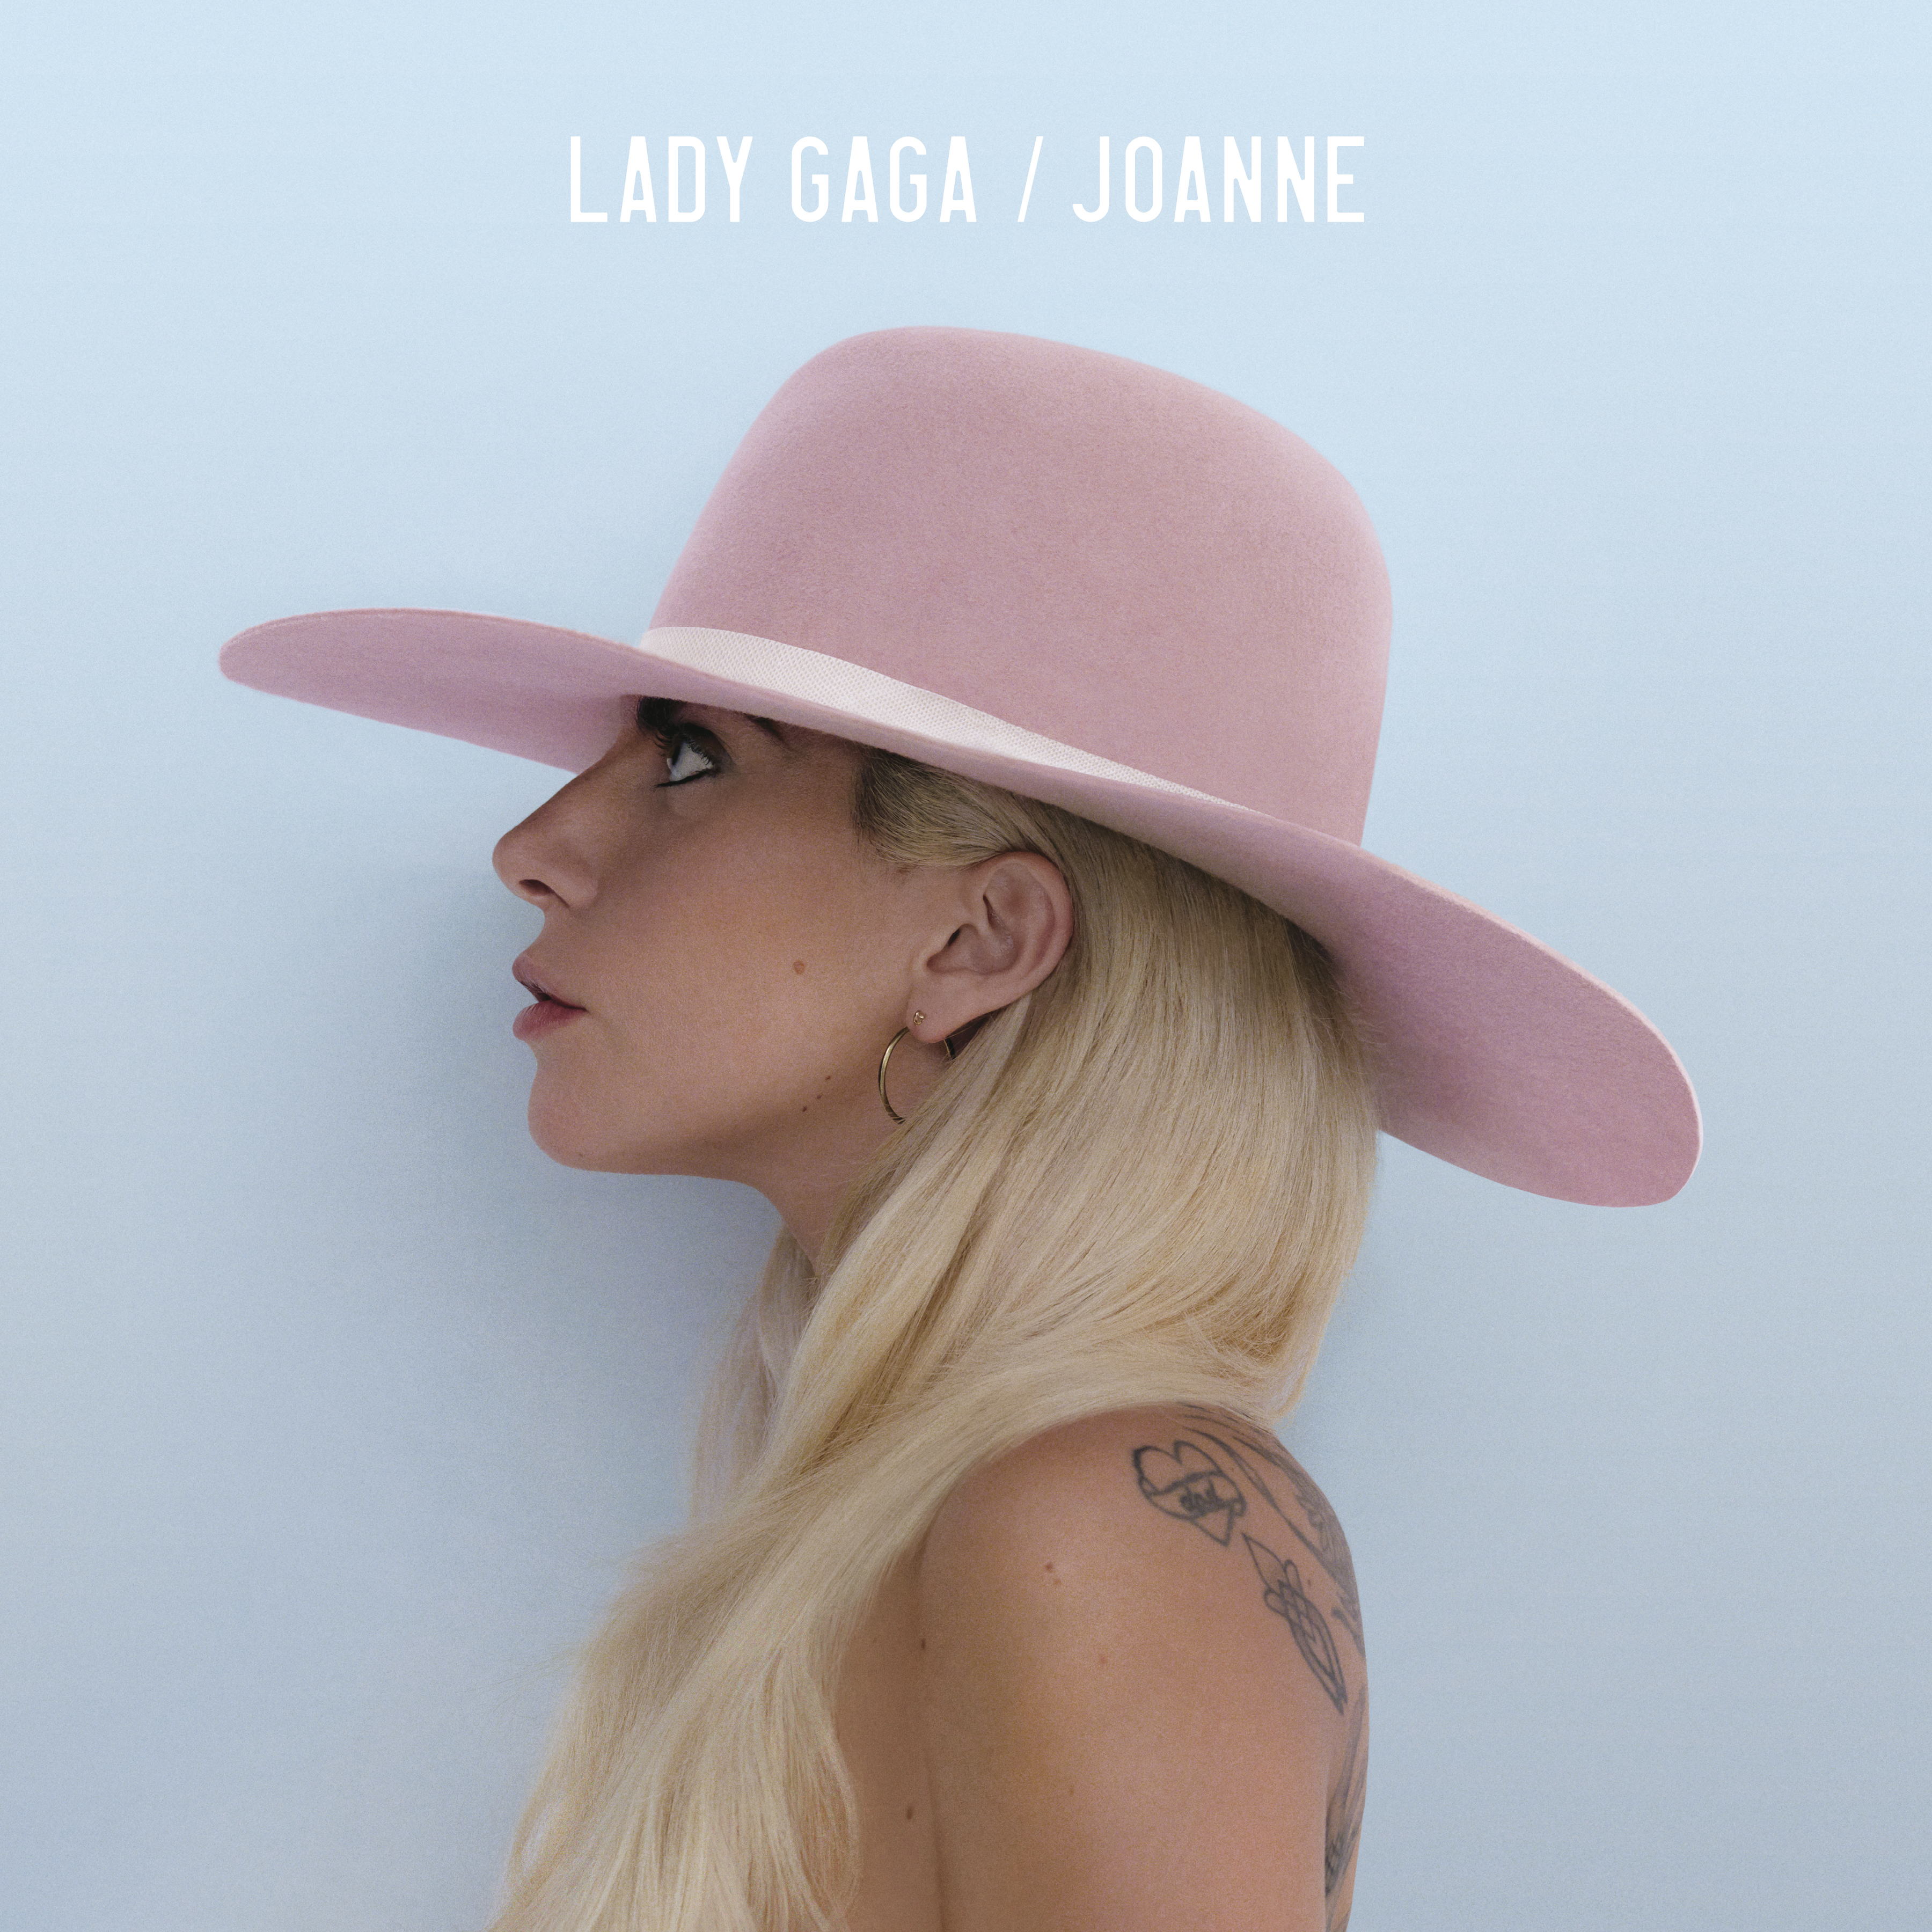 Joanne (album), Gagapedia